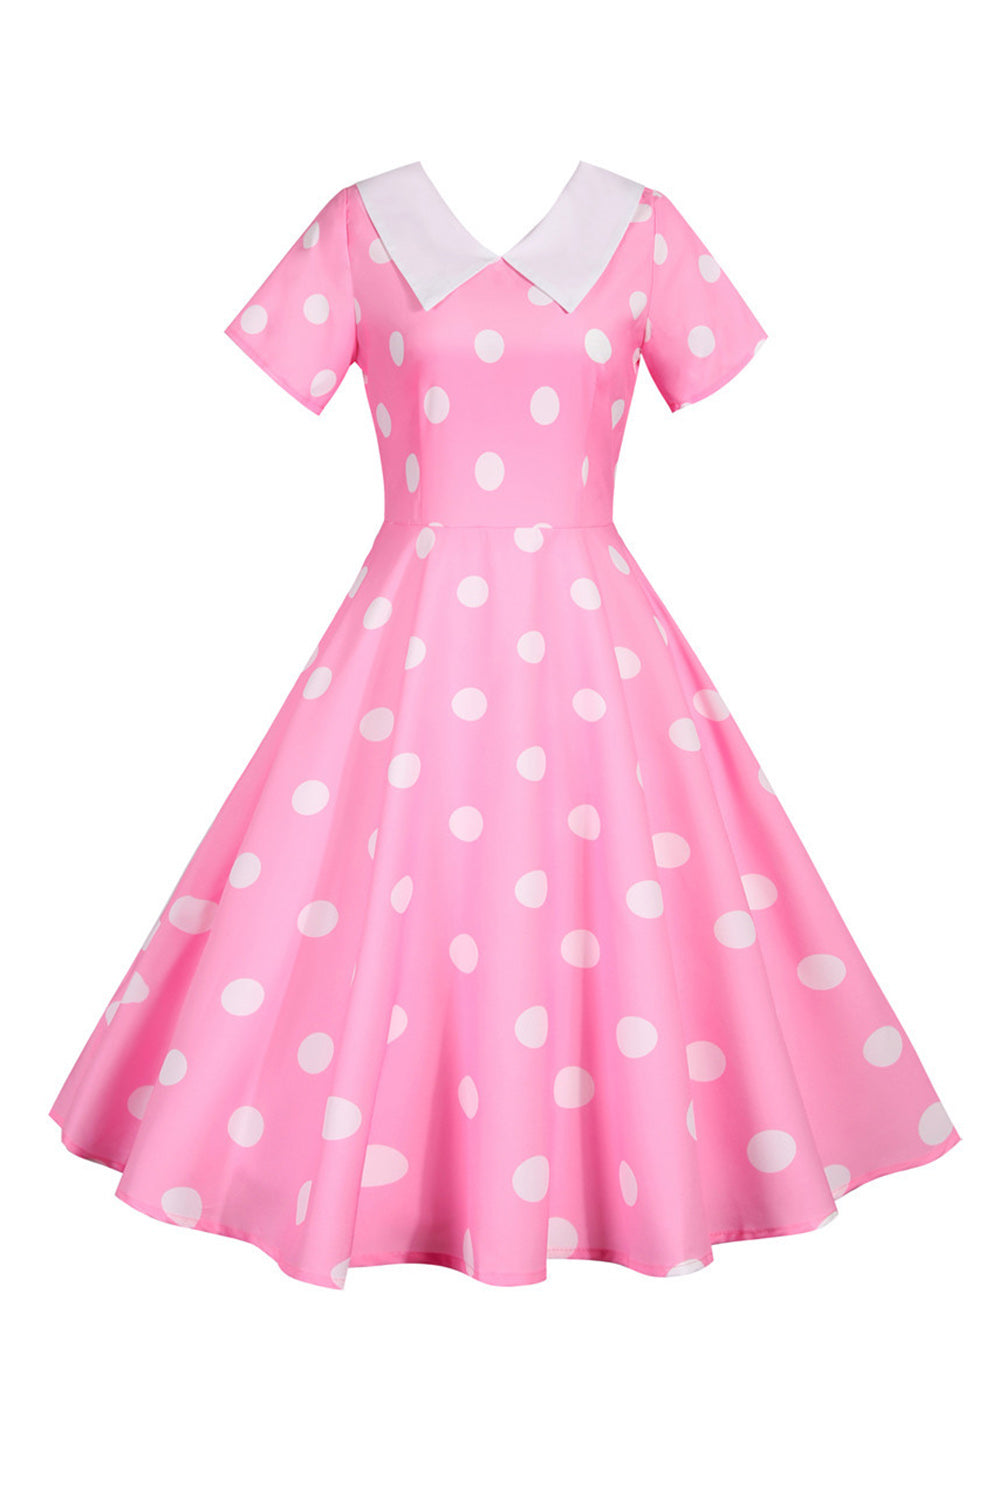 Polka Dots Pink Vintage Dress with Short Sleeves